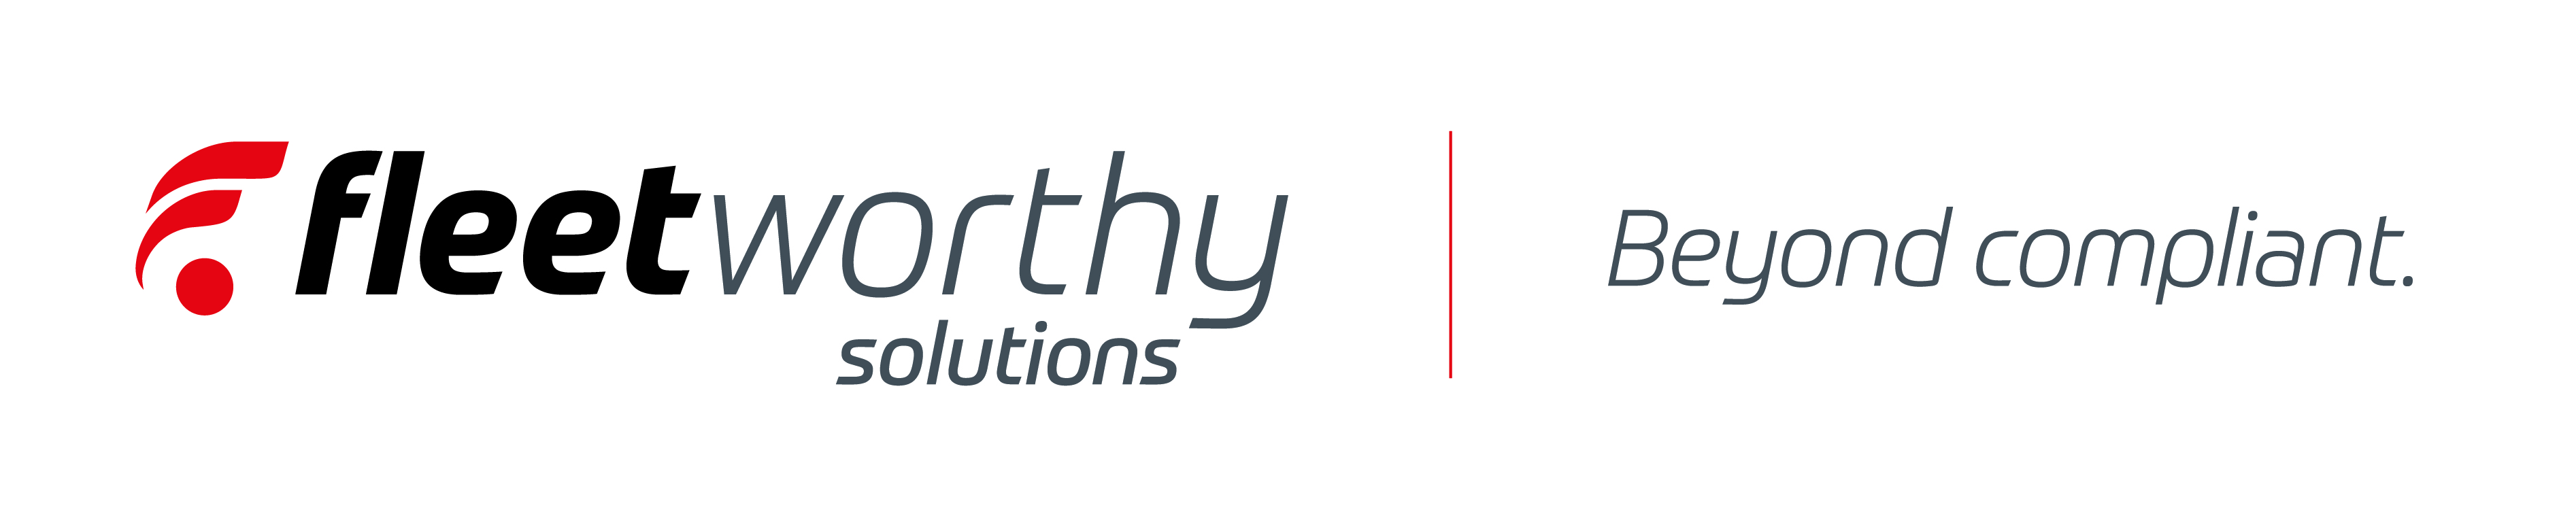 Horizontal Fleetworthy Solutions and Tagline Logo